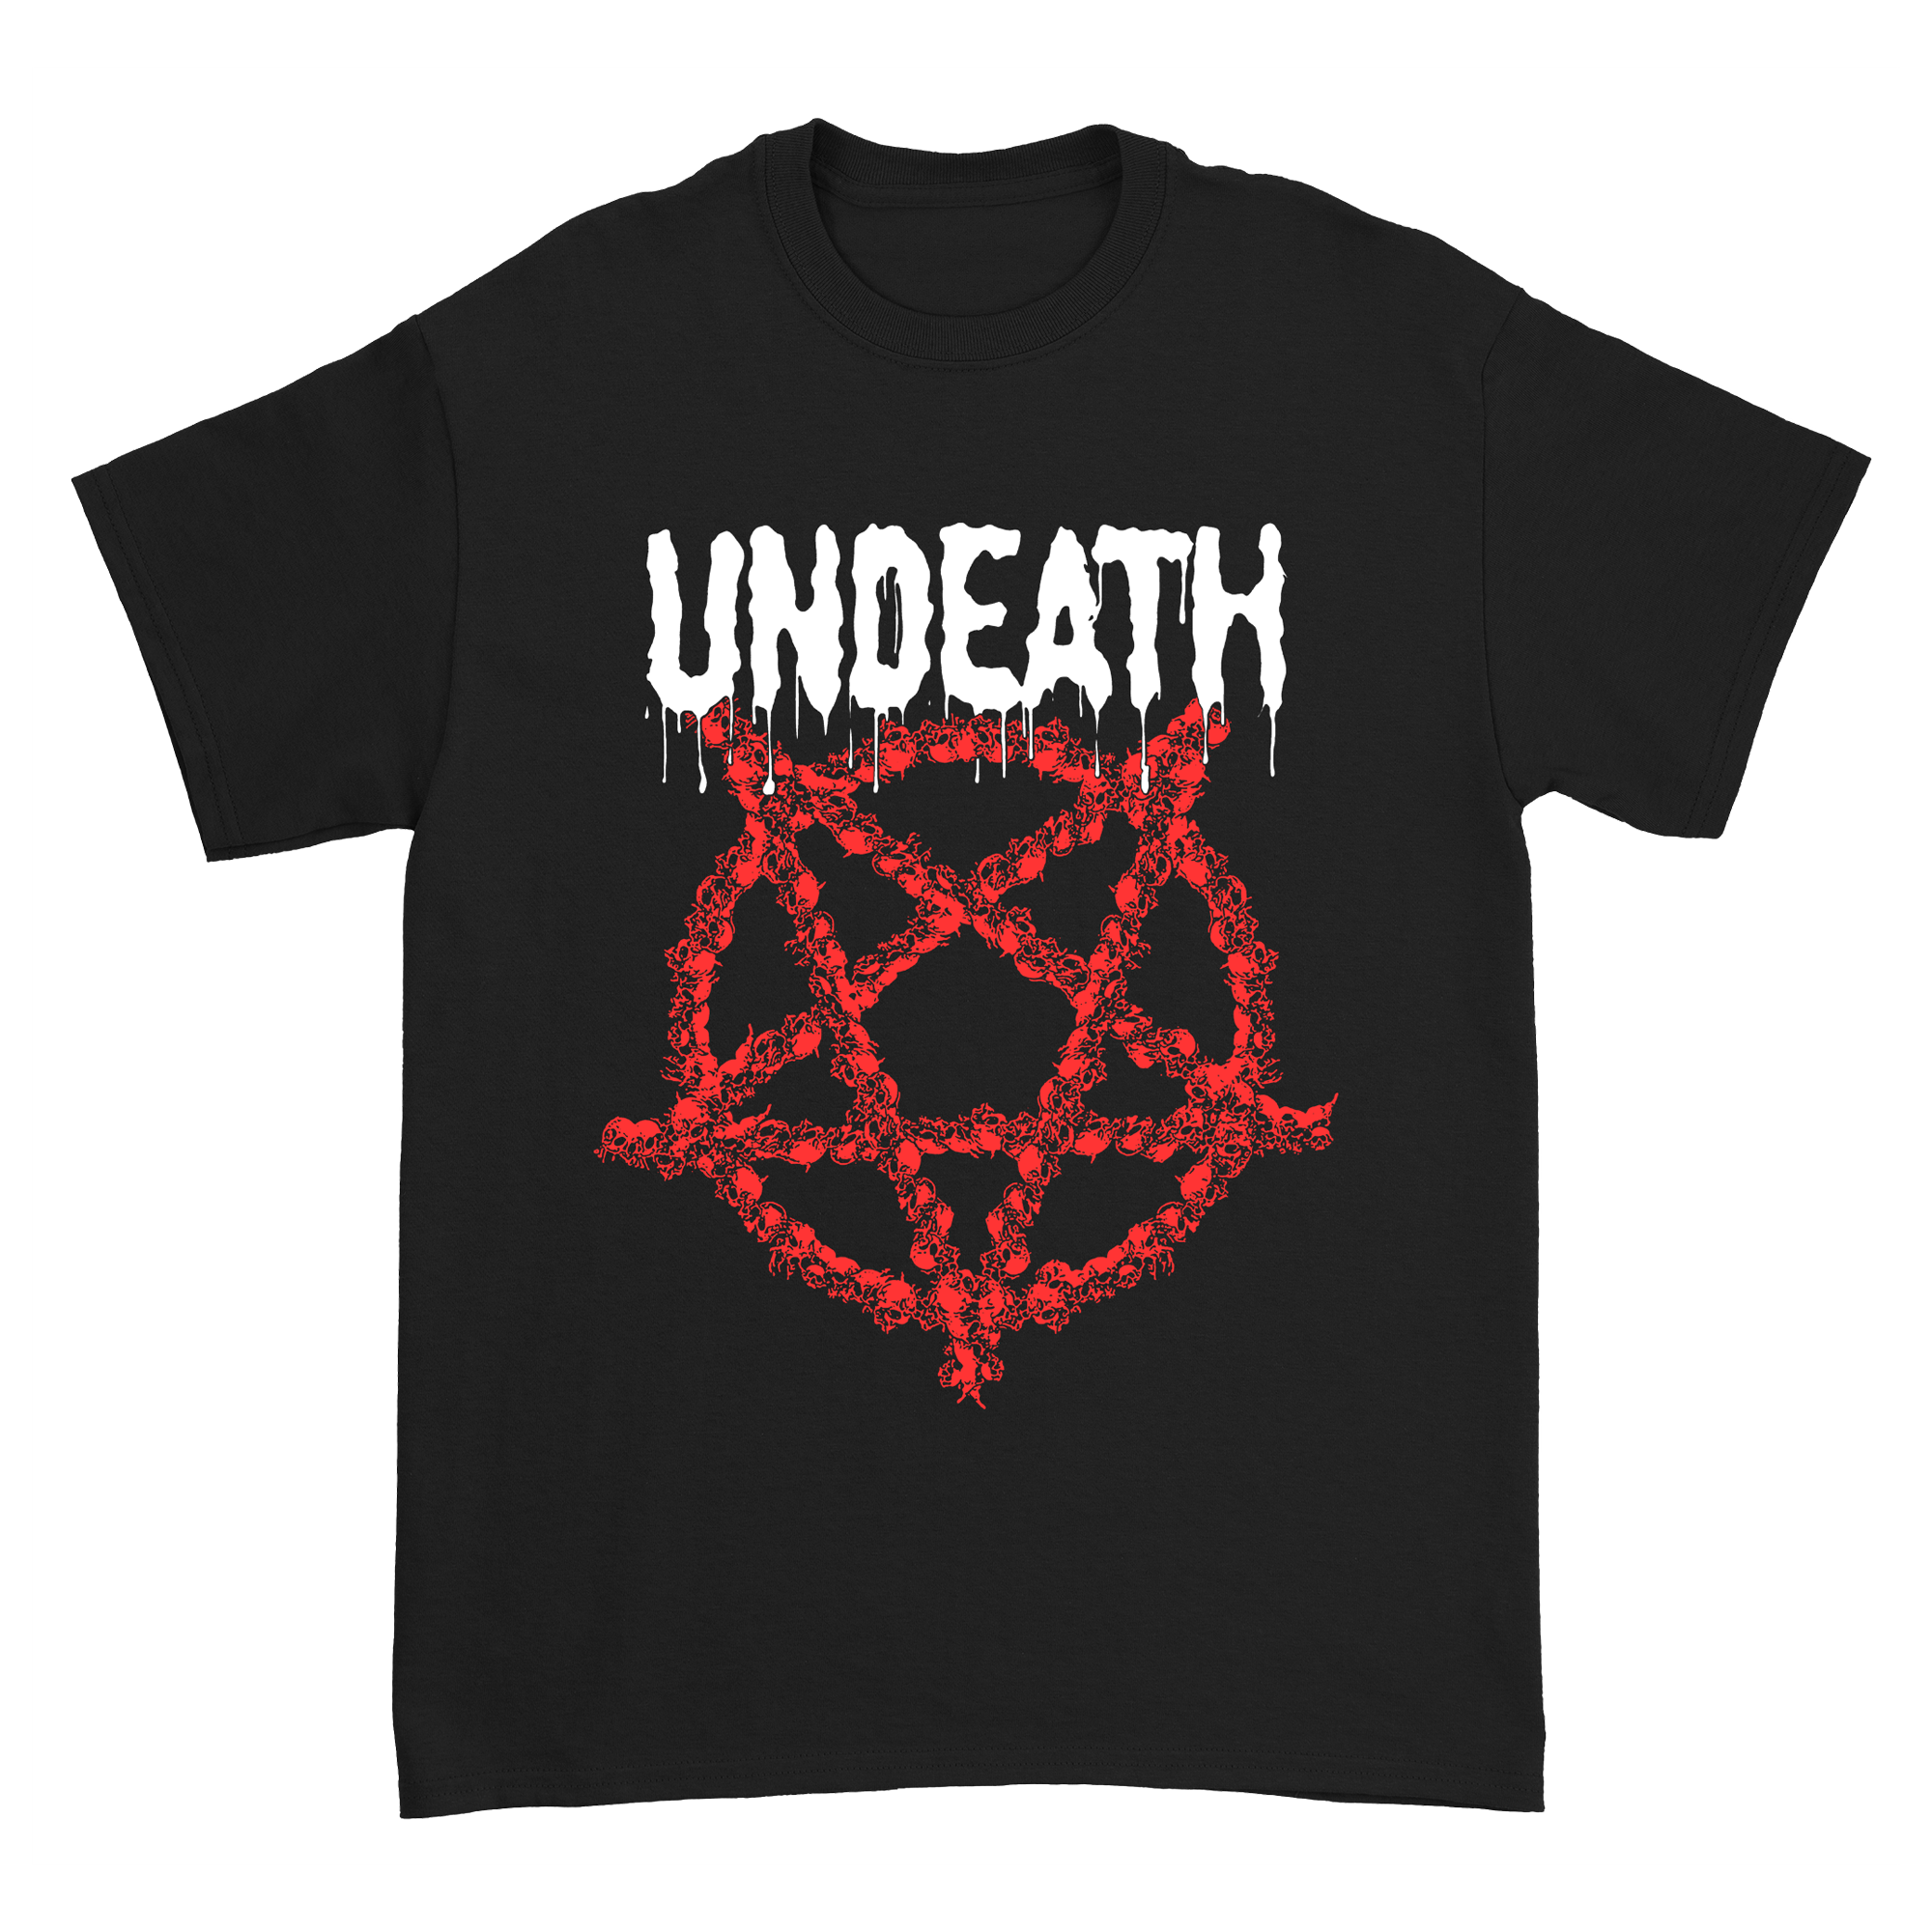 Skull Death Metal T-Shirt (Pre-Order)